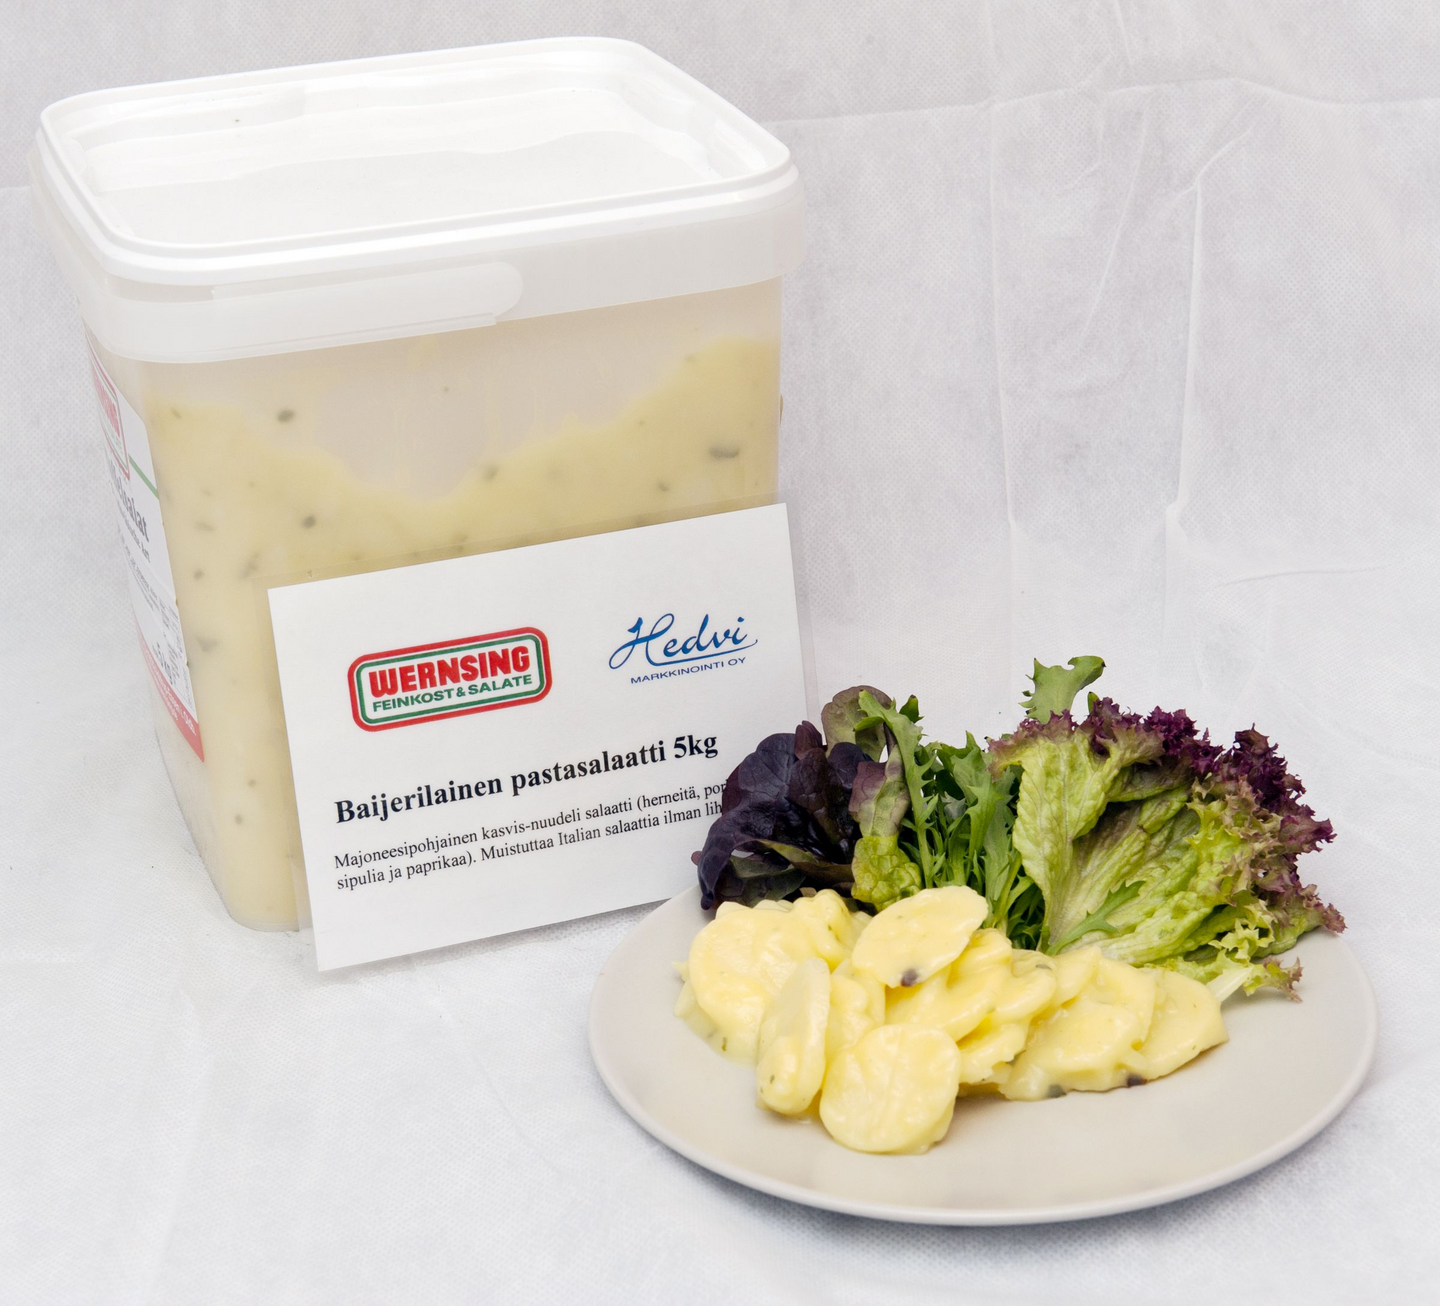 Wernsing baijerilainen perunasalaatti 5kg — HoReCa-tukku Kespro